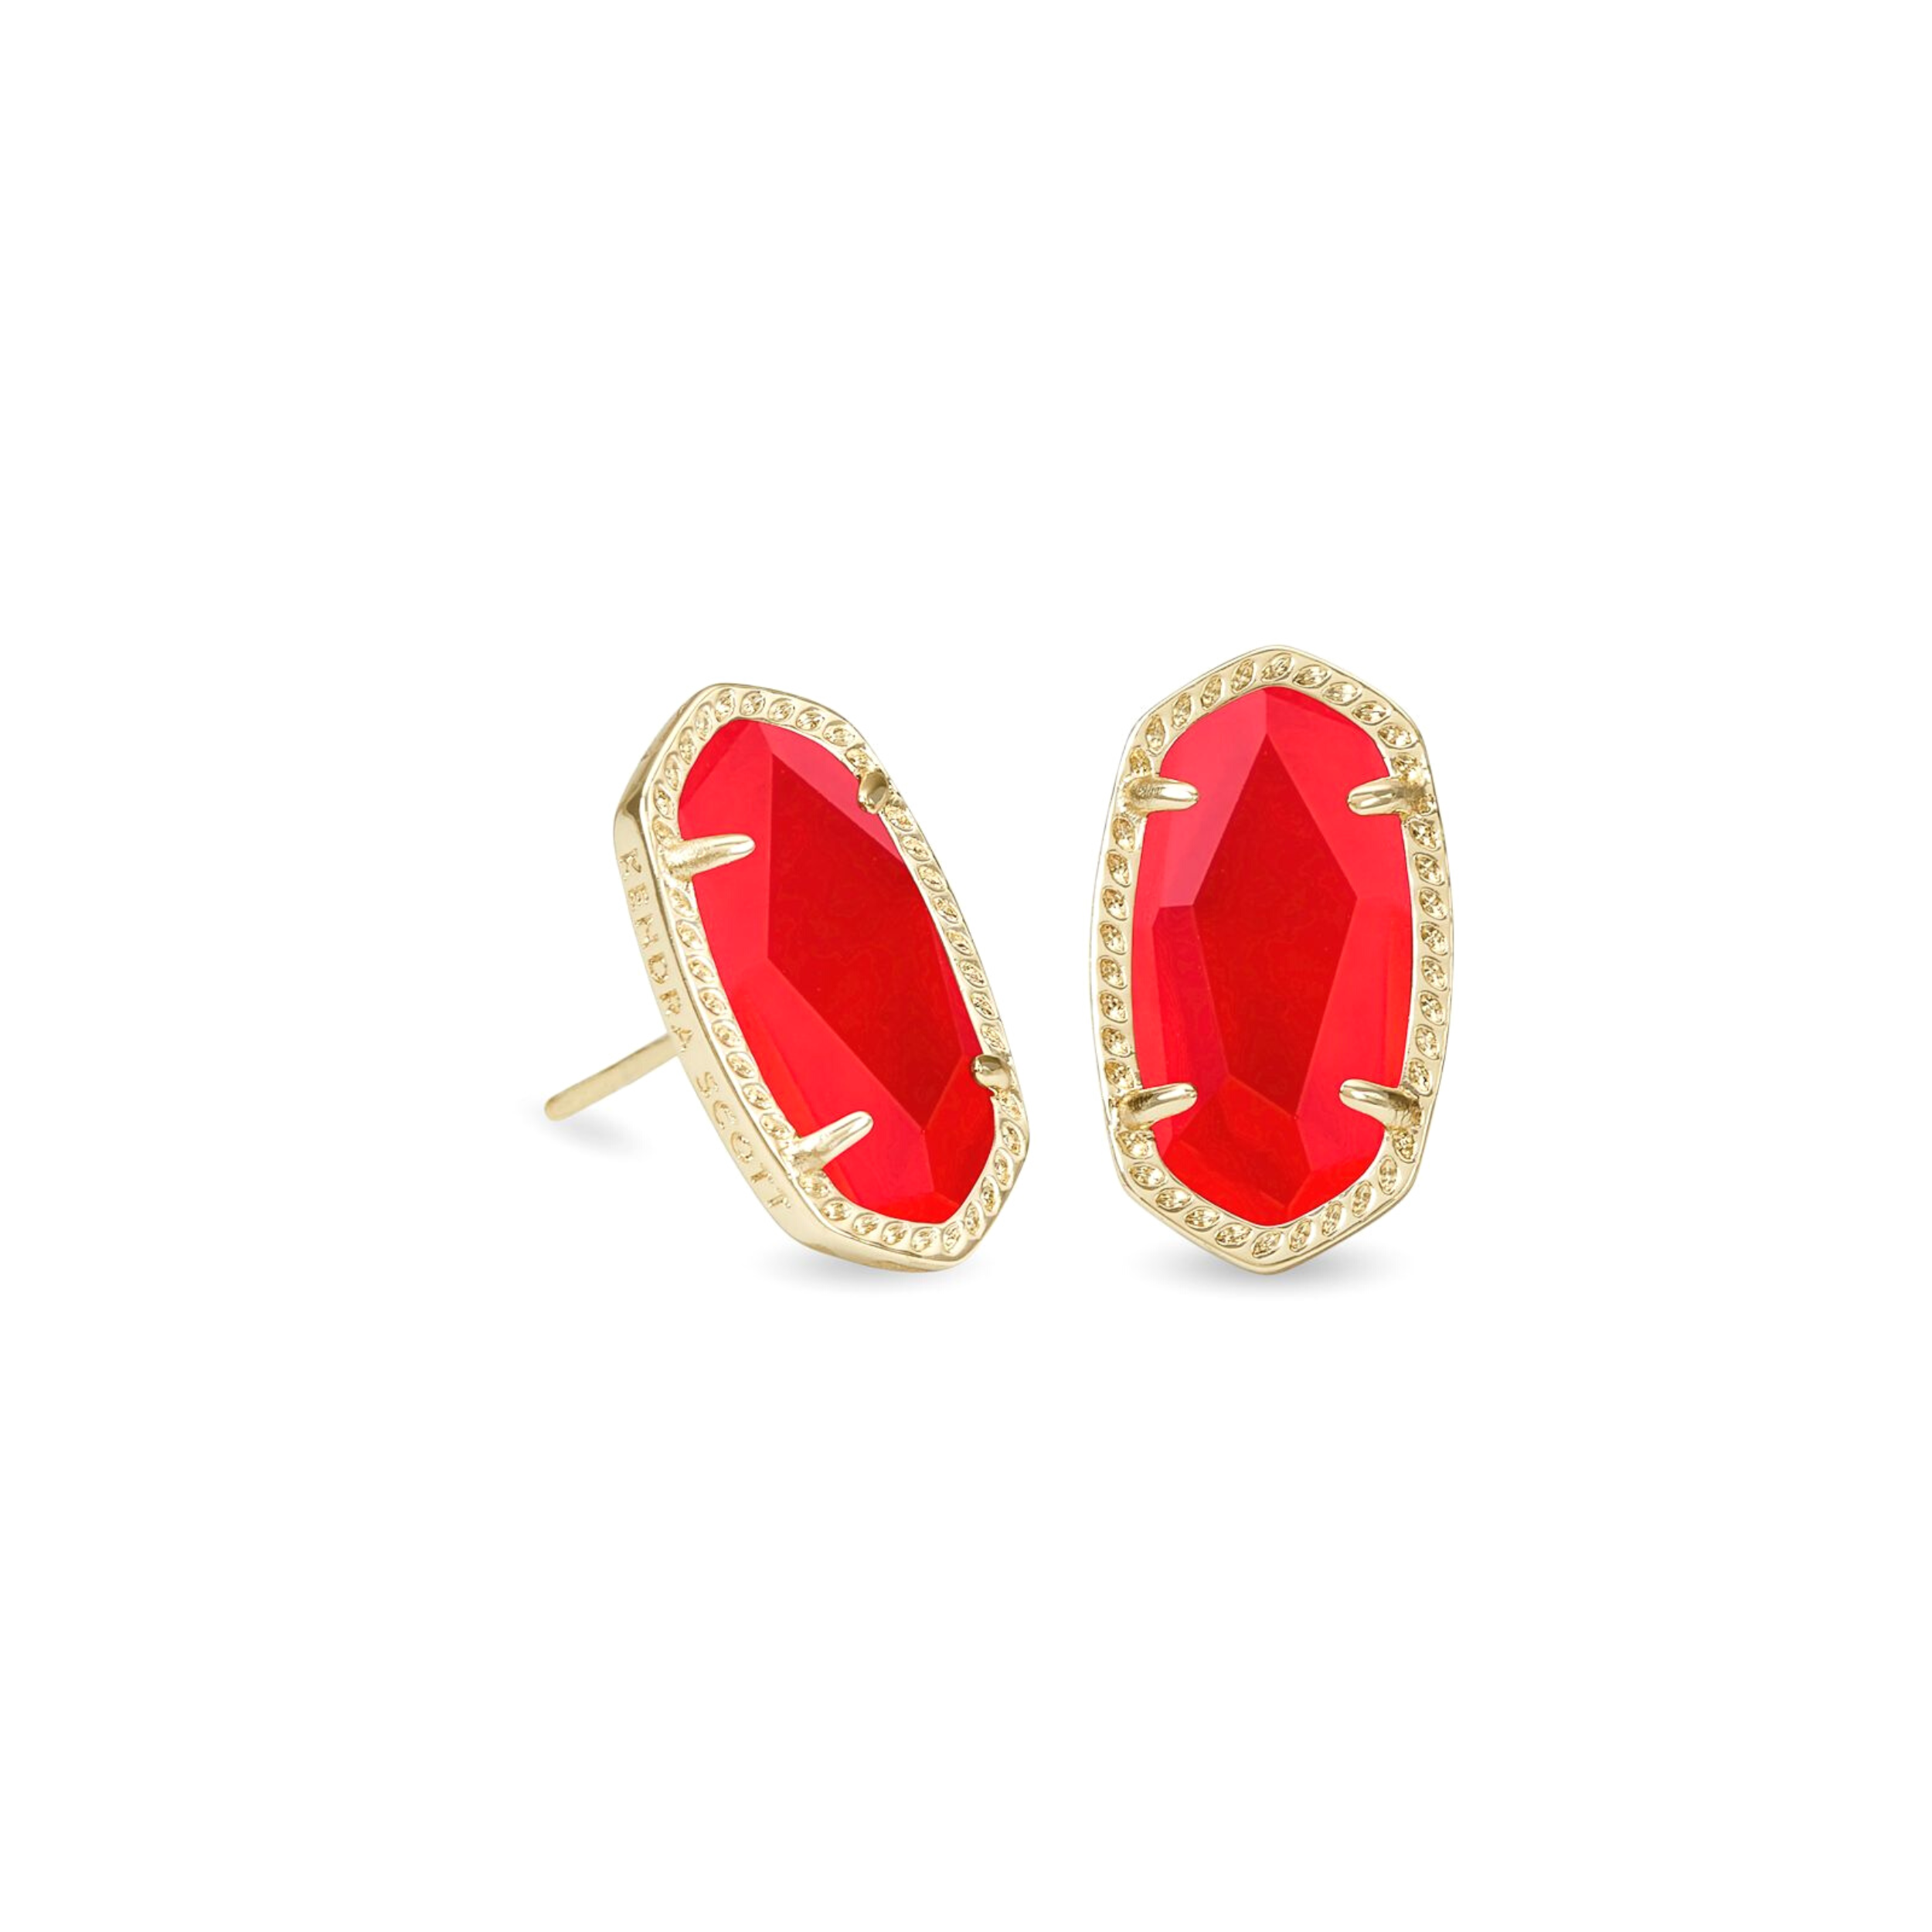 Kendra Scott | Ellie Gold Stud Earrings in Red Illusion